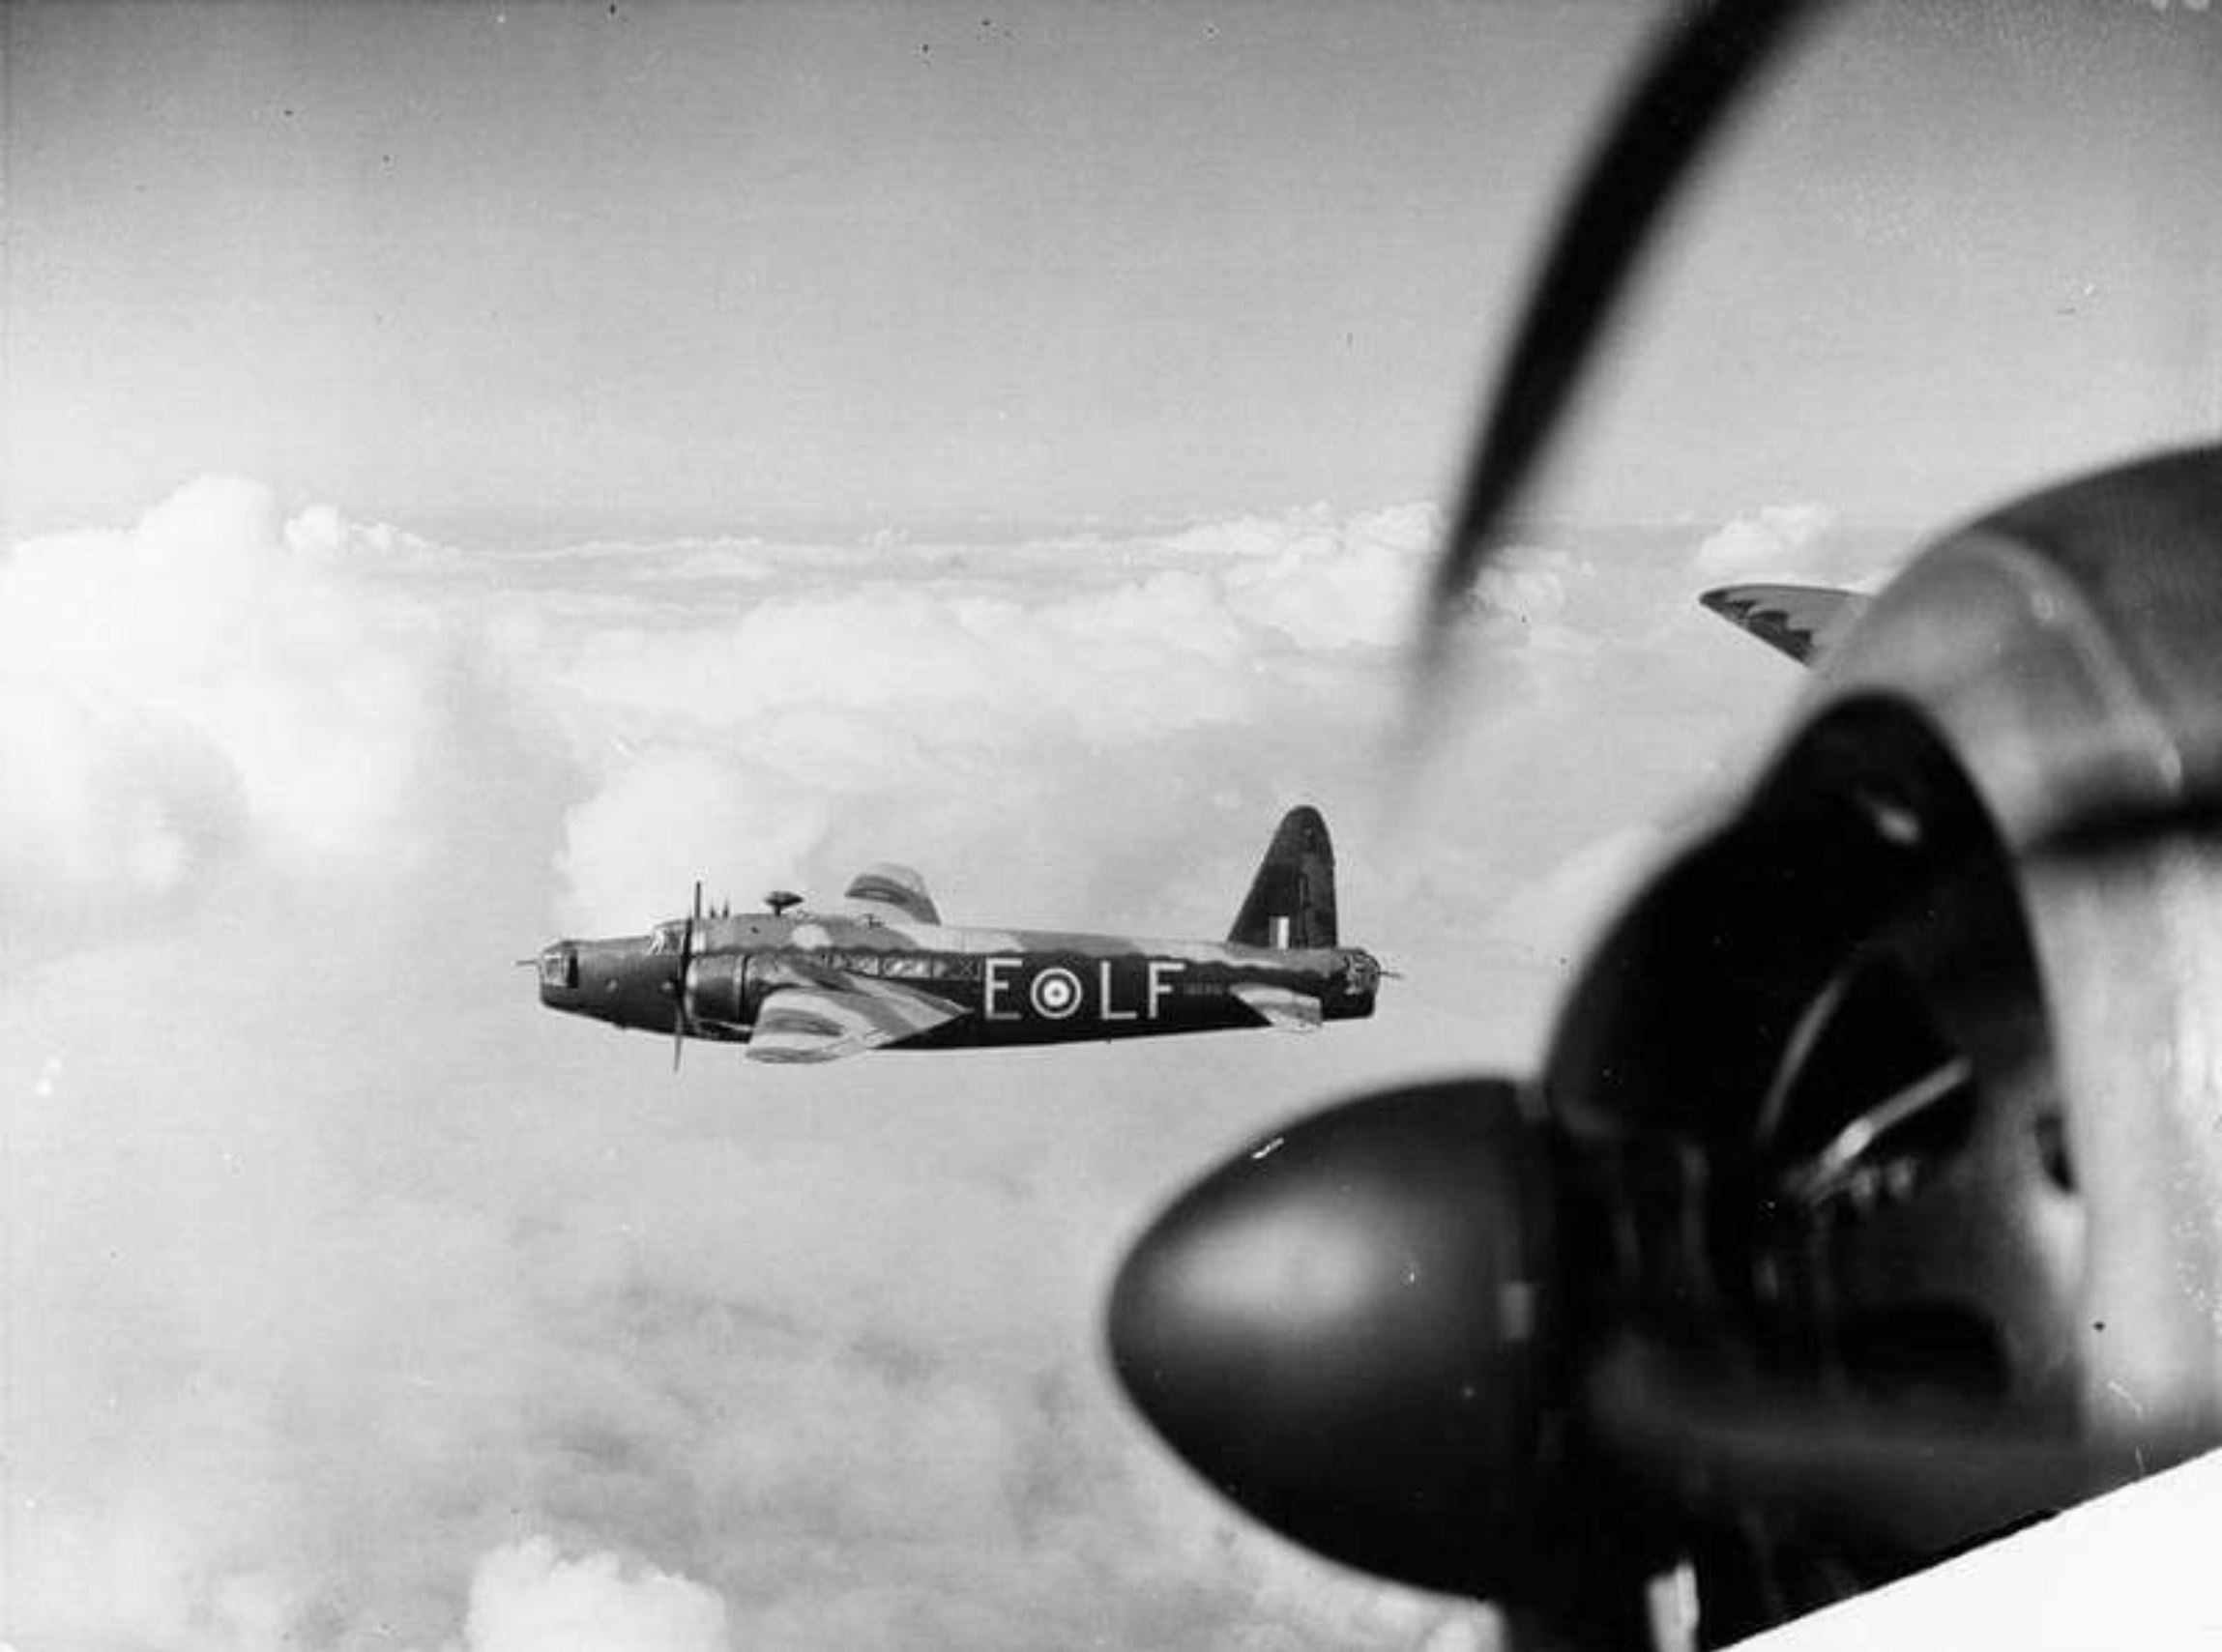 Vickers Wellington Ic RAF 37Sqn LFE over clouds ebay 01